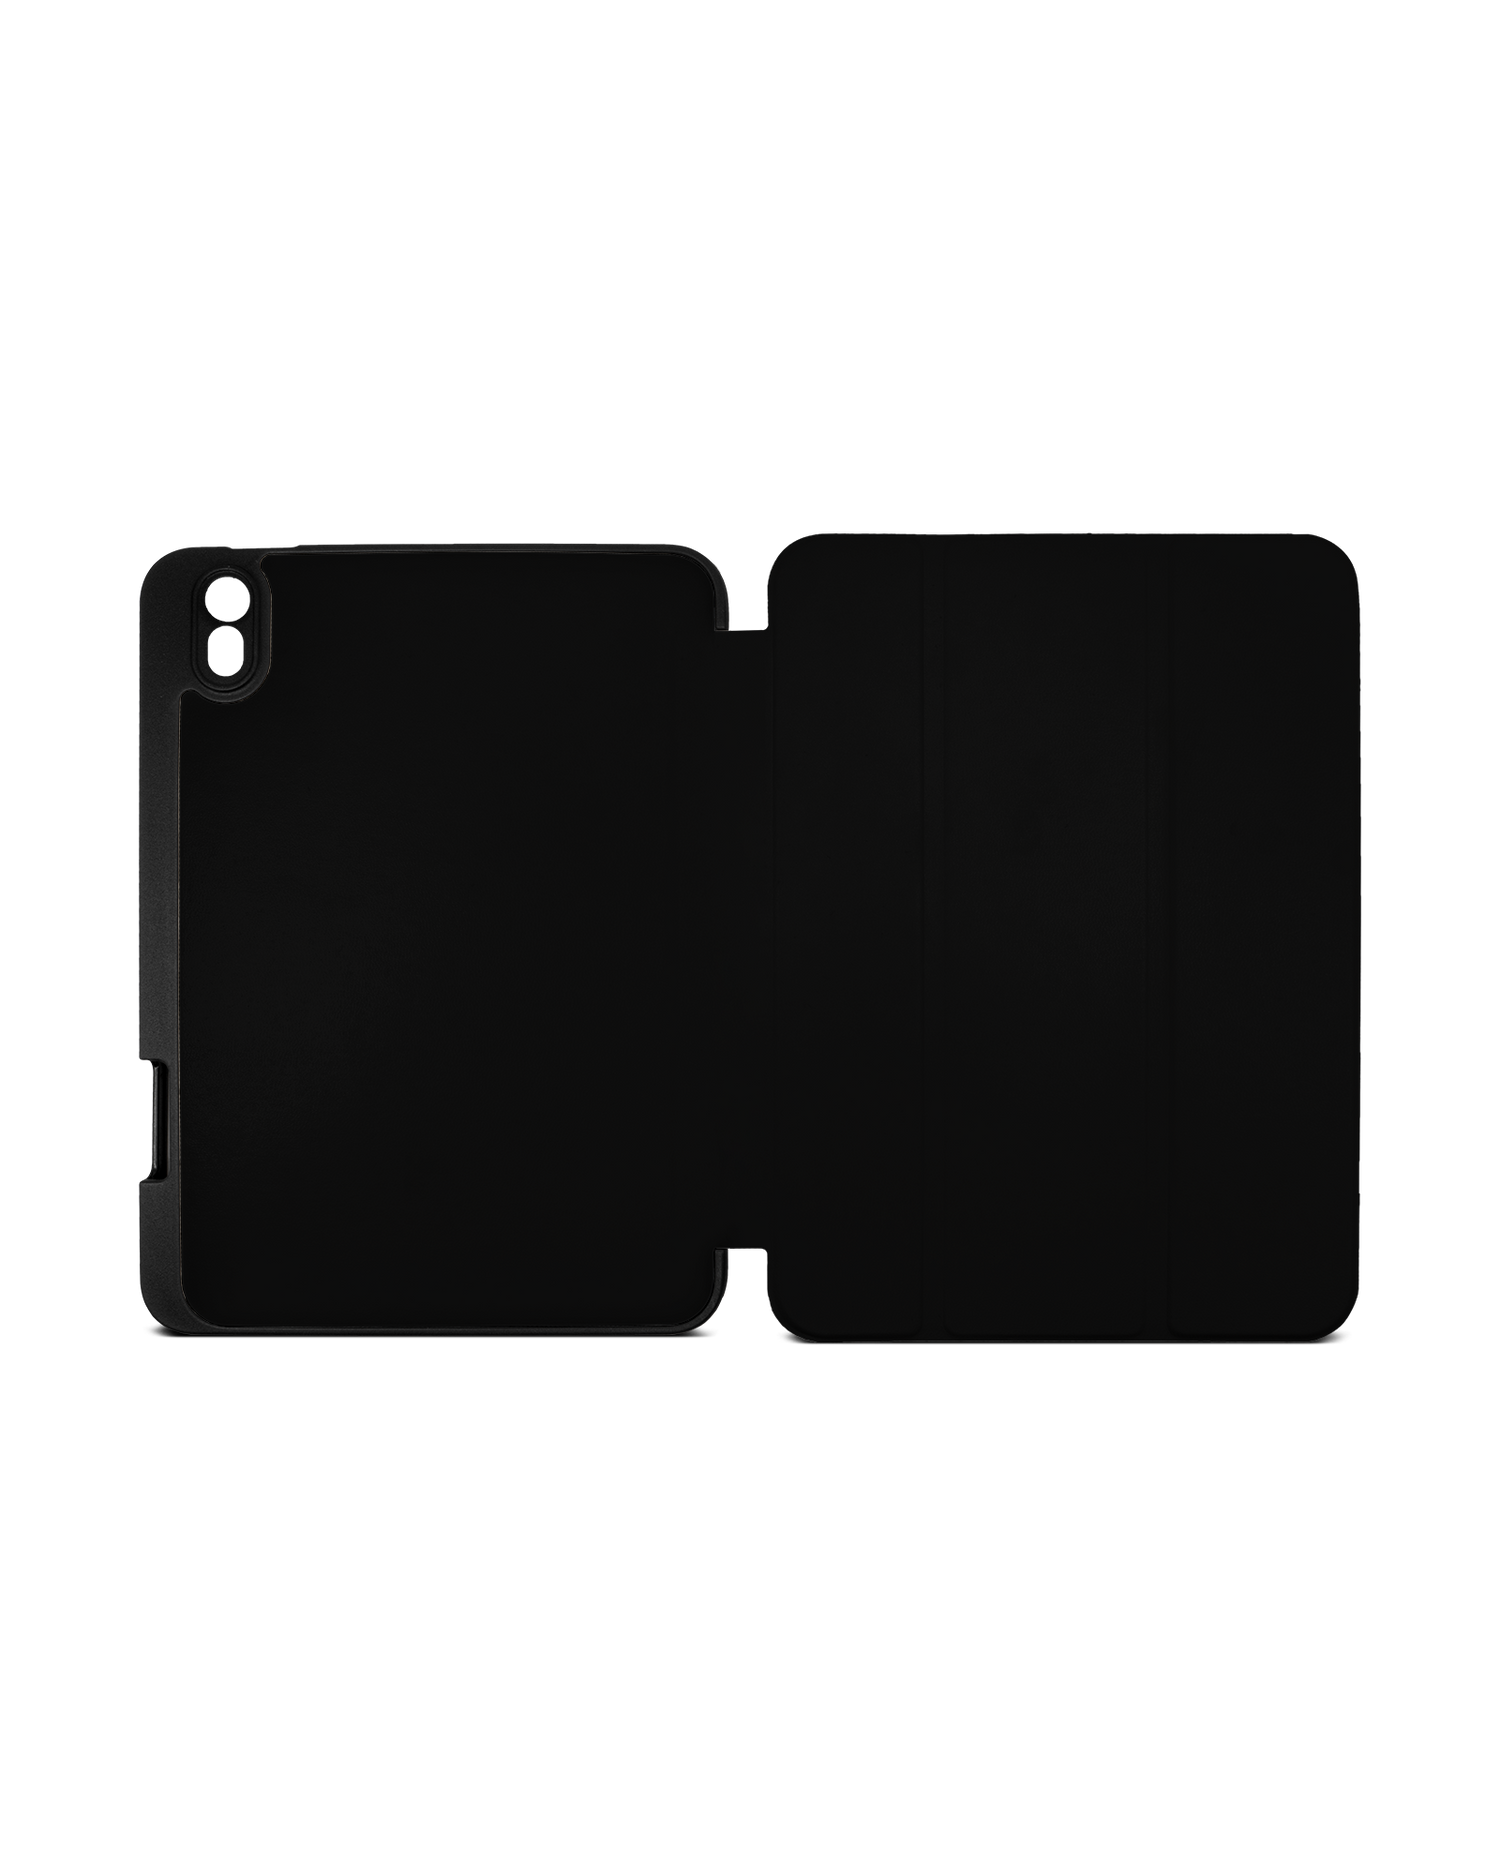 BLACK iPad Case with Pencil Holder Apple iPad mini 6 (2021): Opened exterior view